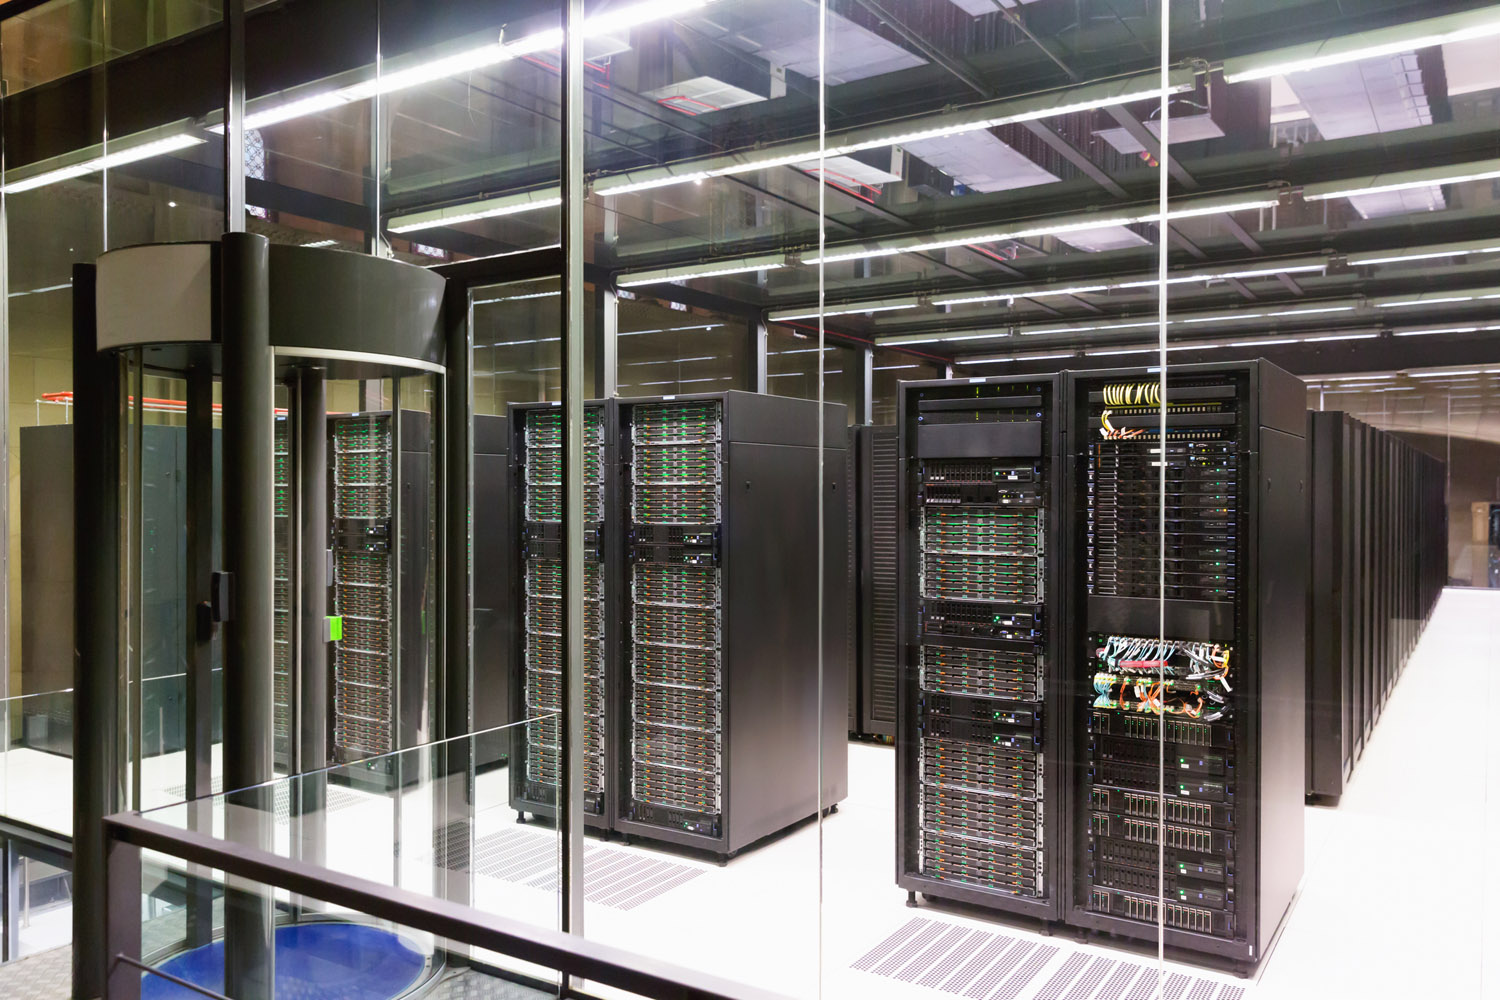 Image of supercomputing center